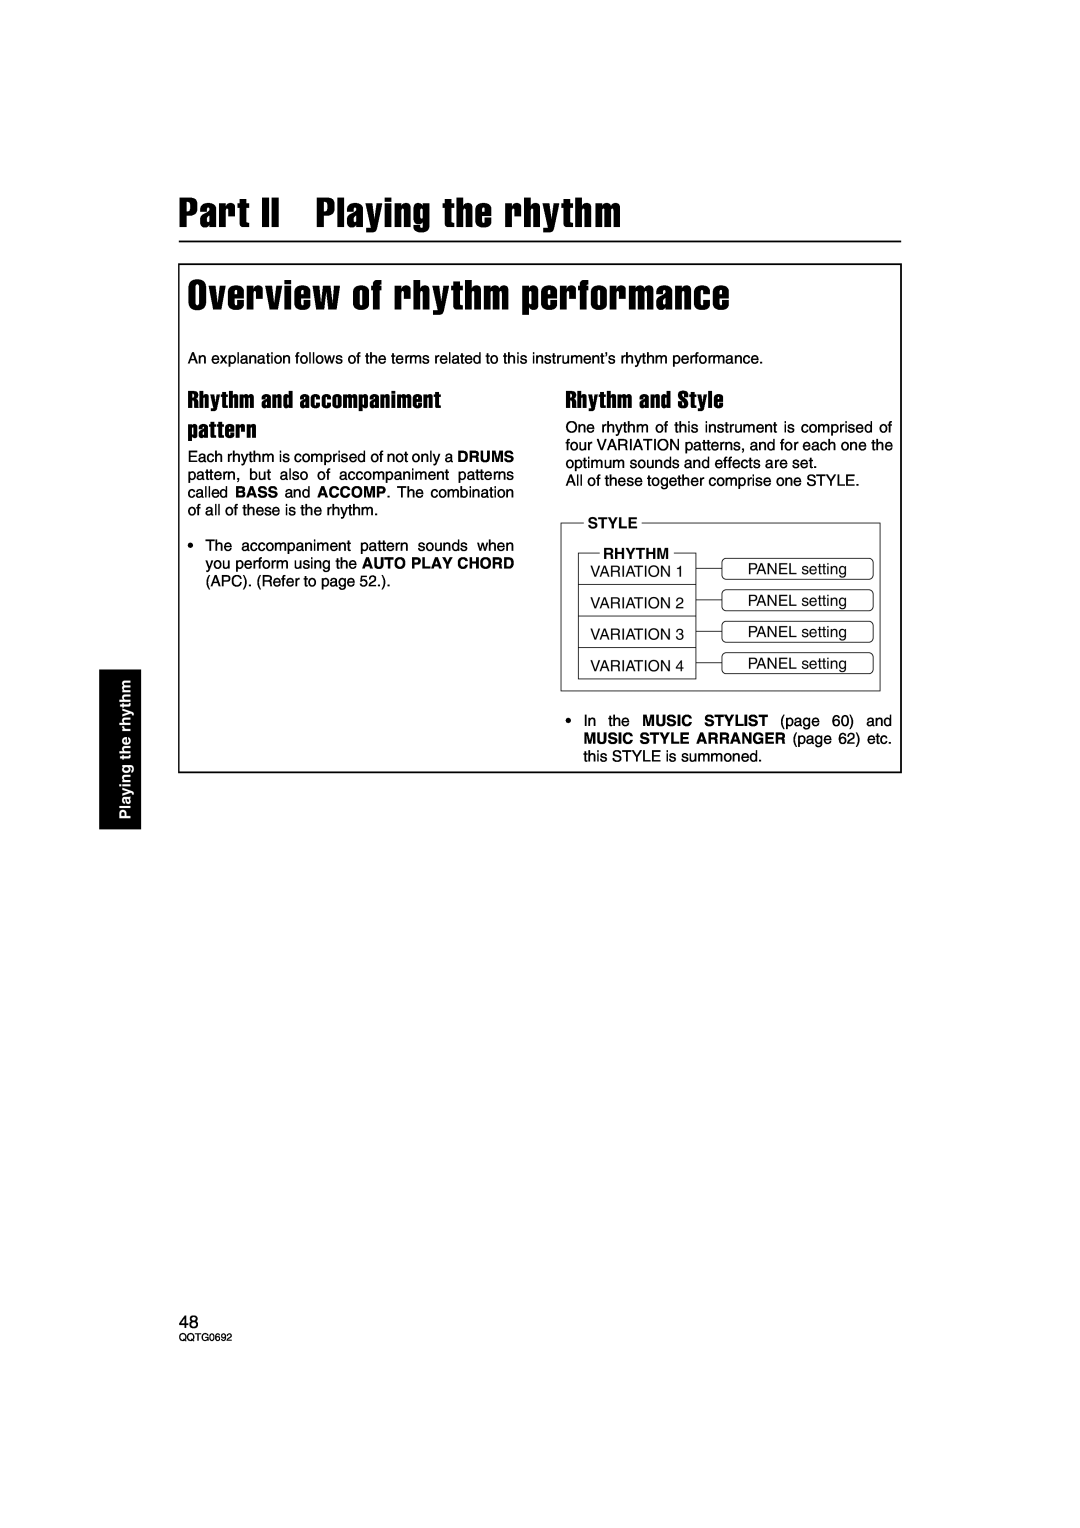 Panasonic SX-KN2600 Part II Playing the rhythm Overview of rhythm performance, Rhythm and accompaniment pattern, Style 